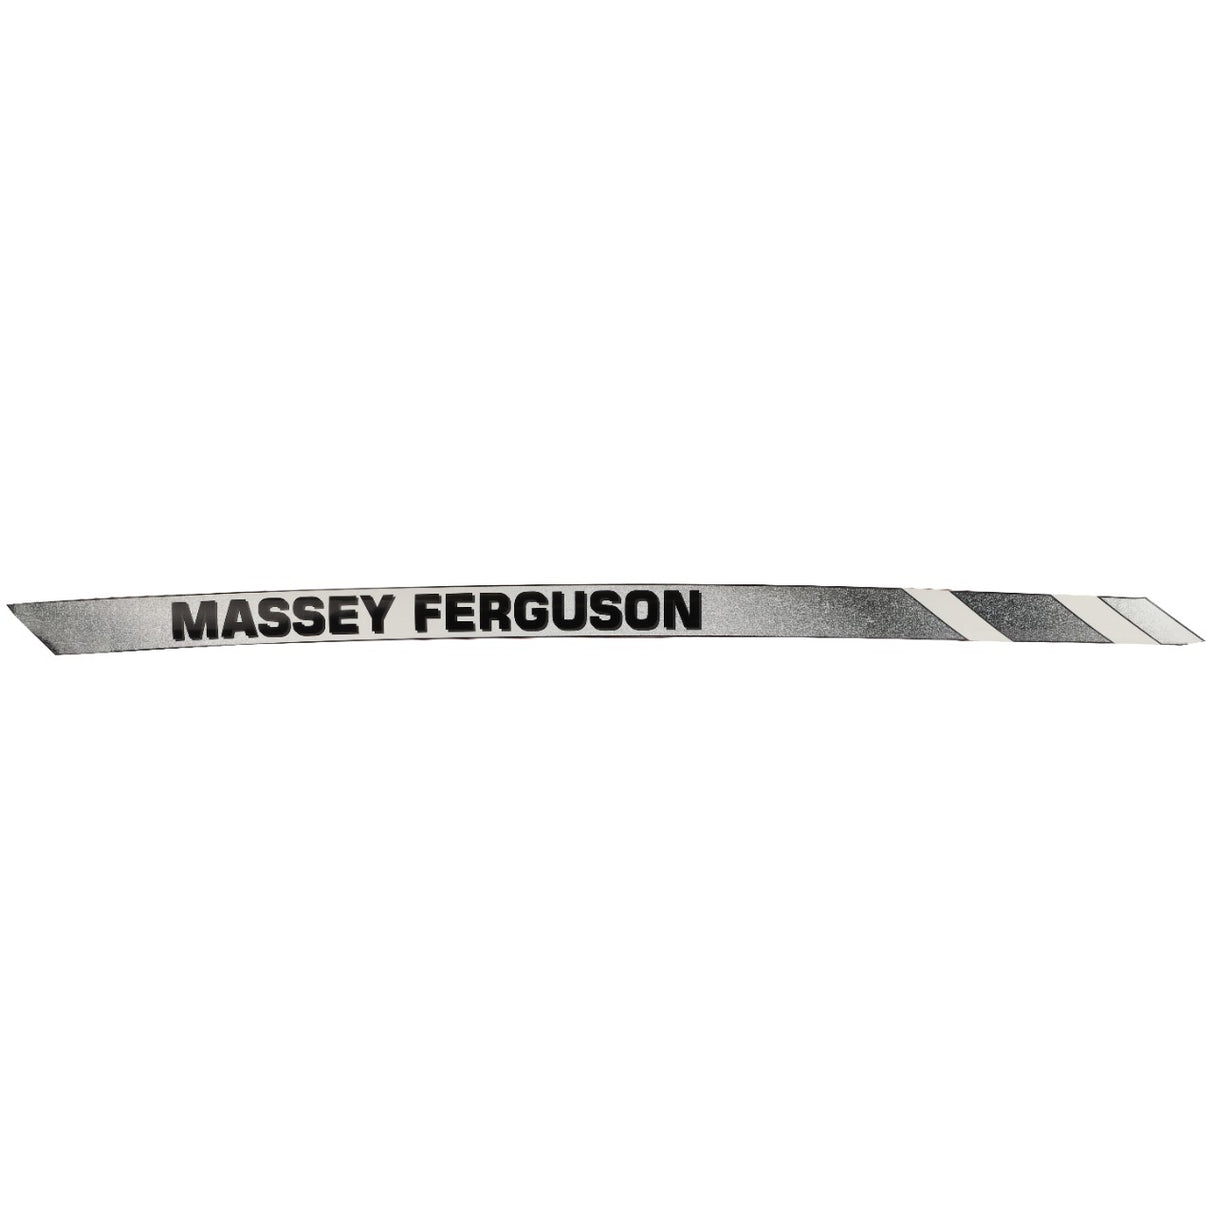 AGCO | Massey Ferguson Decal - Acp0298560 - Farming Parts